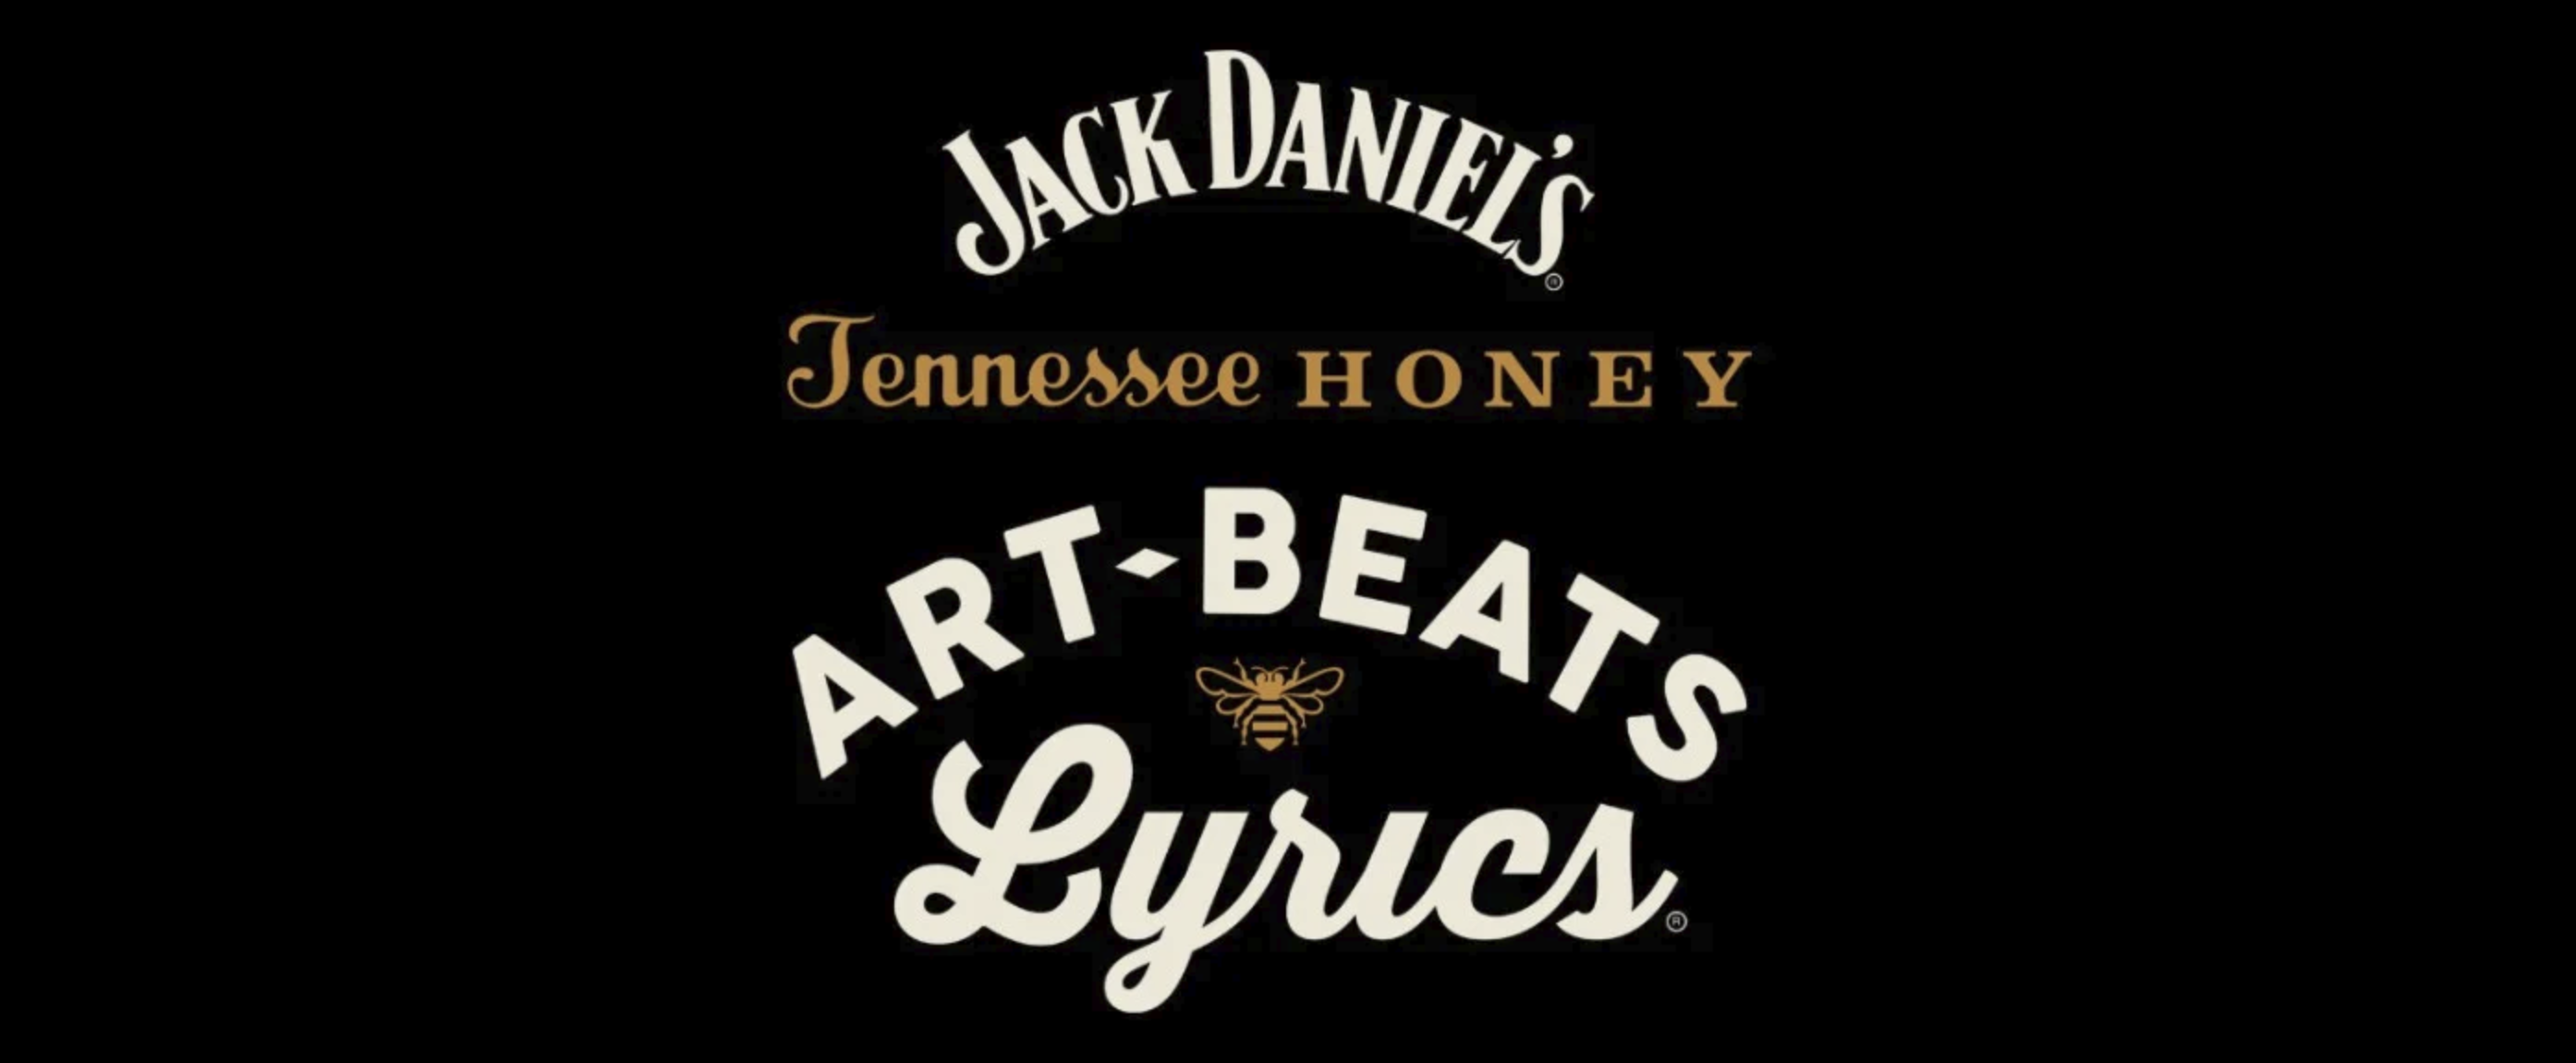 Jack Daniels Art Beats and Lyrics